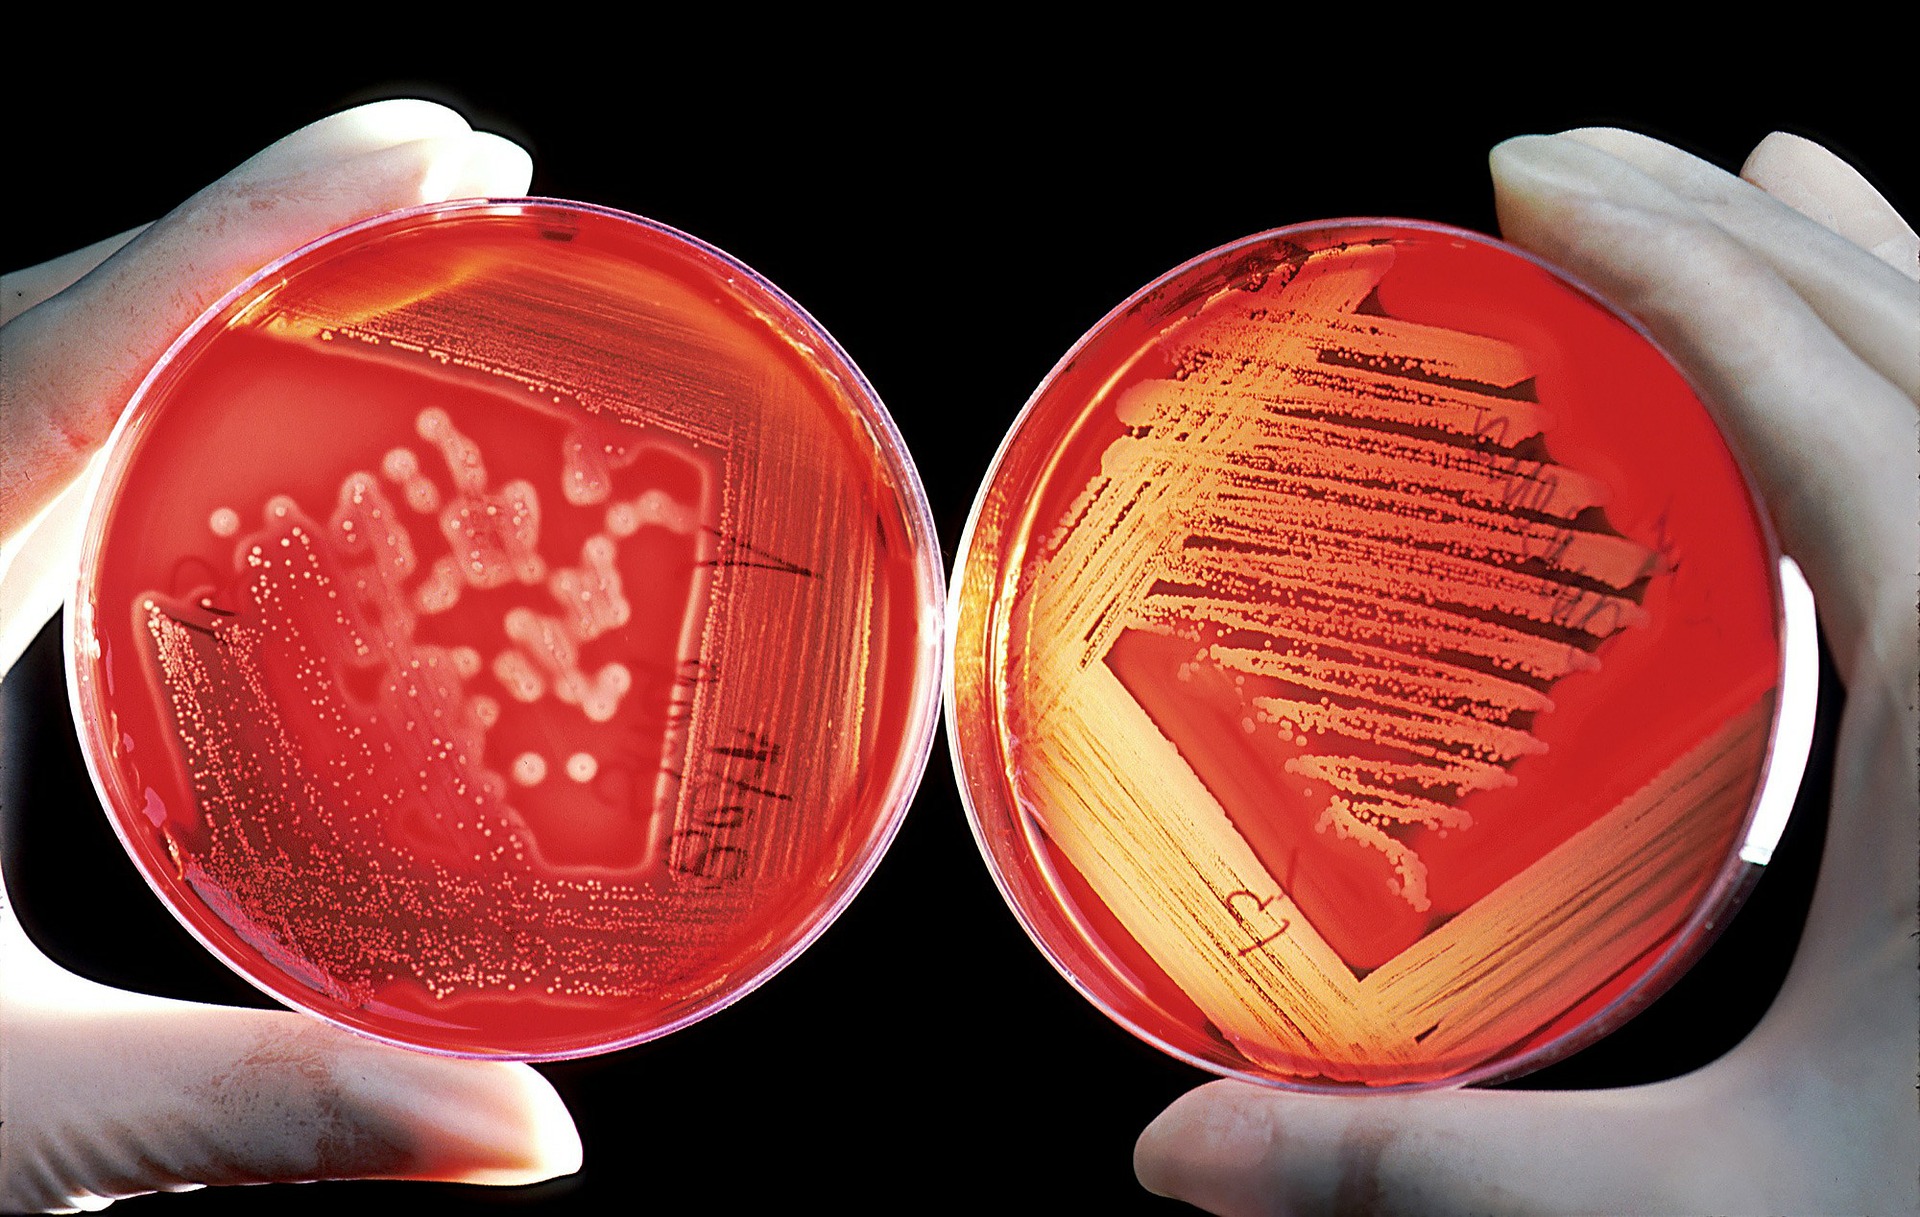 Bacteria growing in petri dish with agar